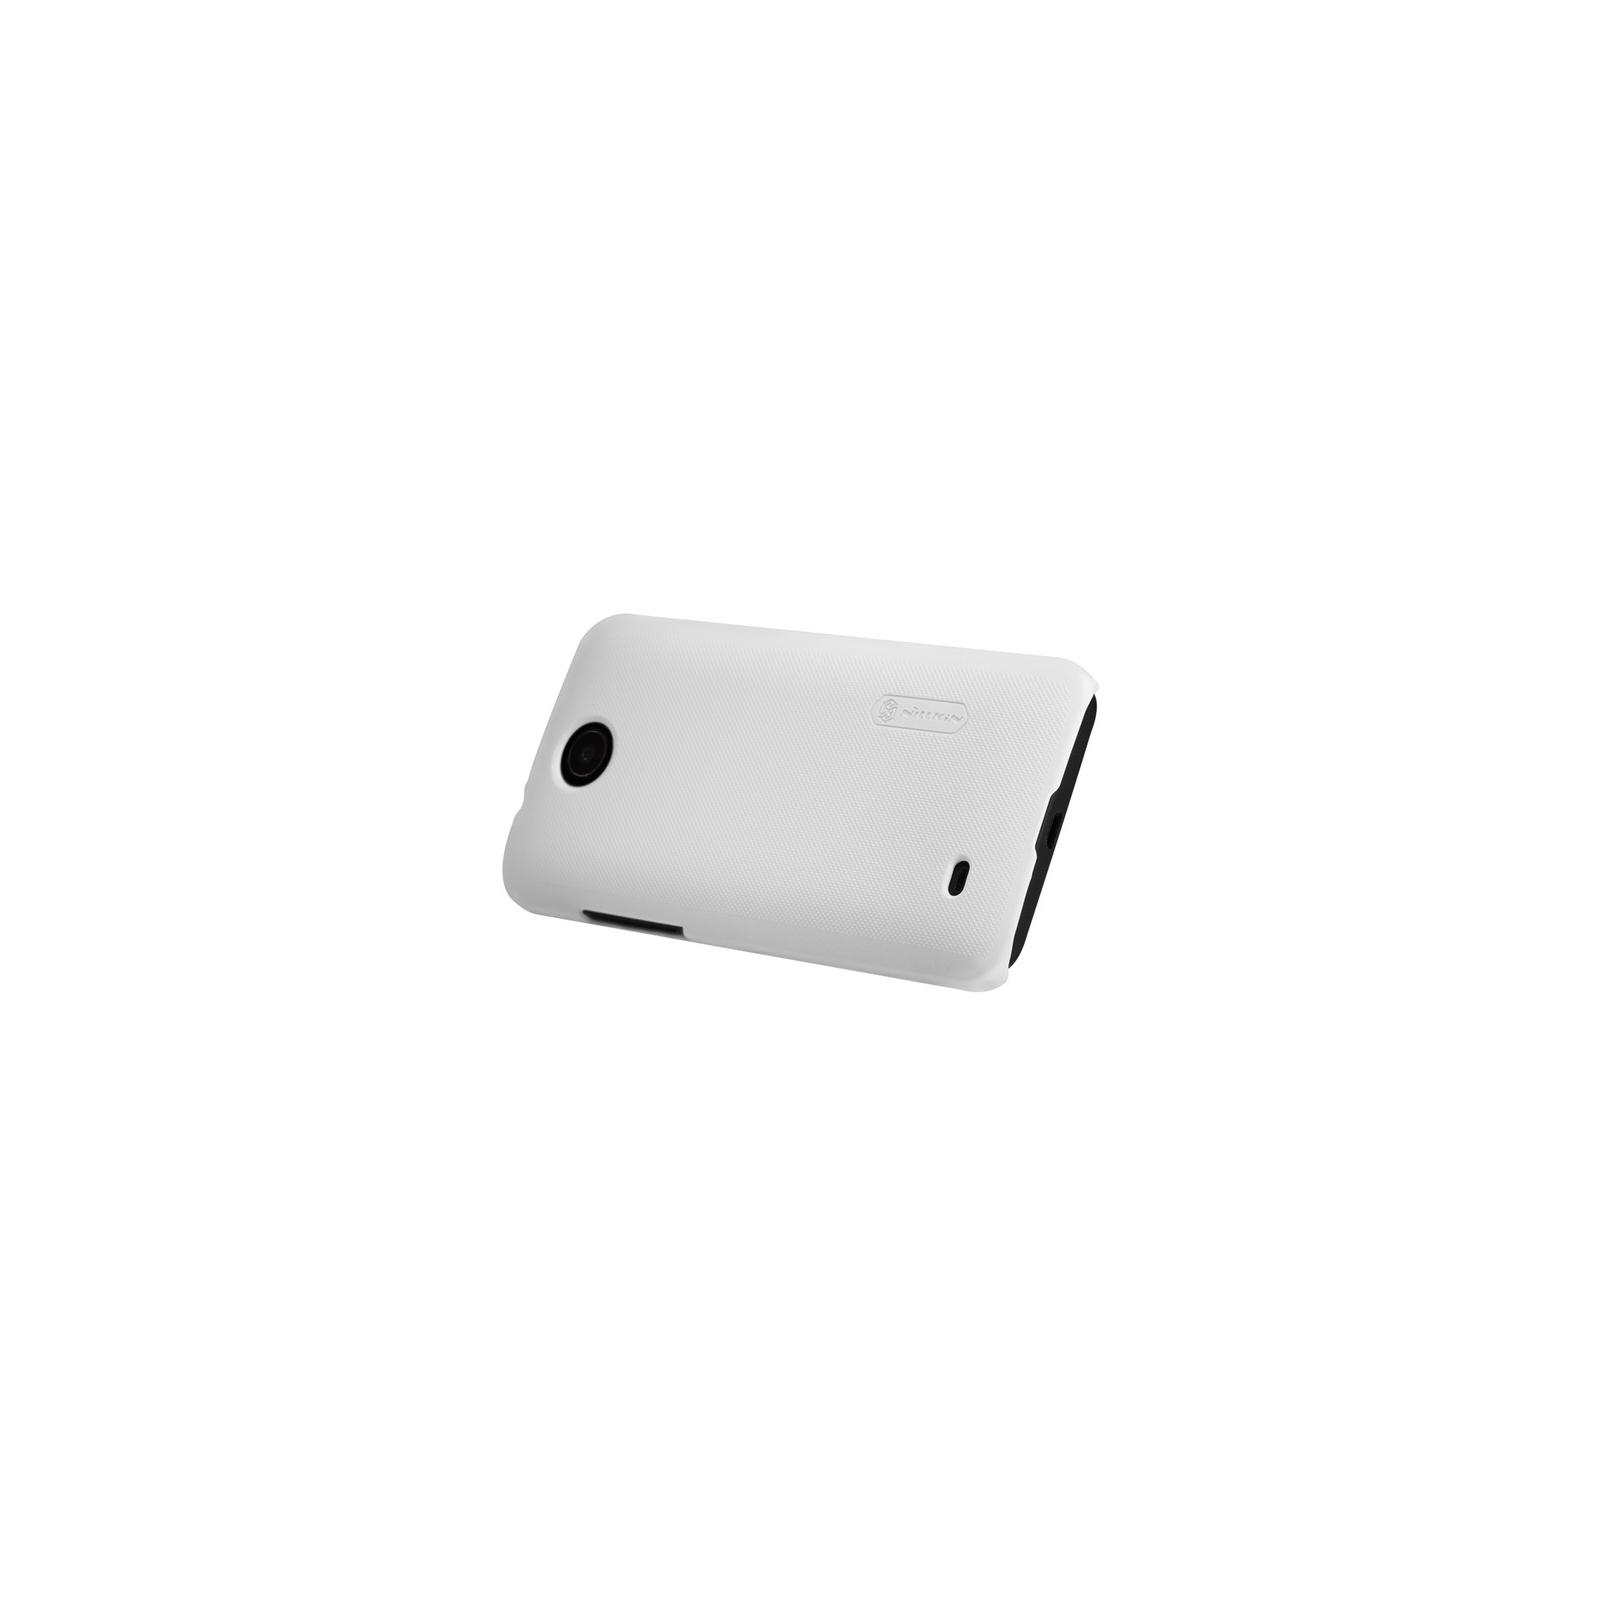 Чехол для мобильного телефона Nillkin для HTC Desire 300 /Super Frosted Shield/White (6100791) изображение 2